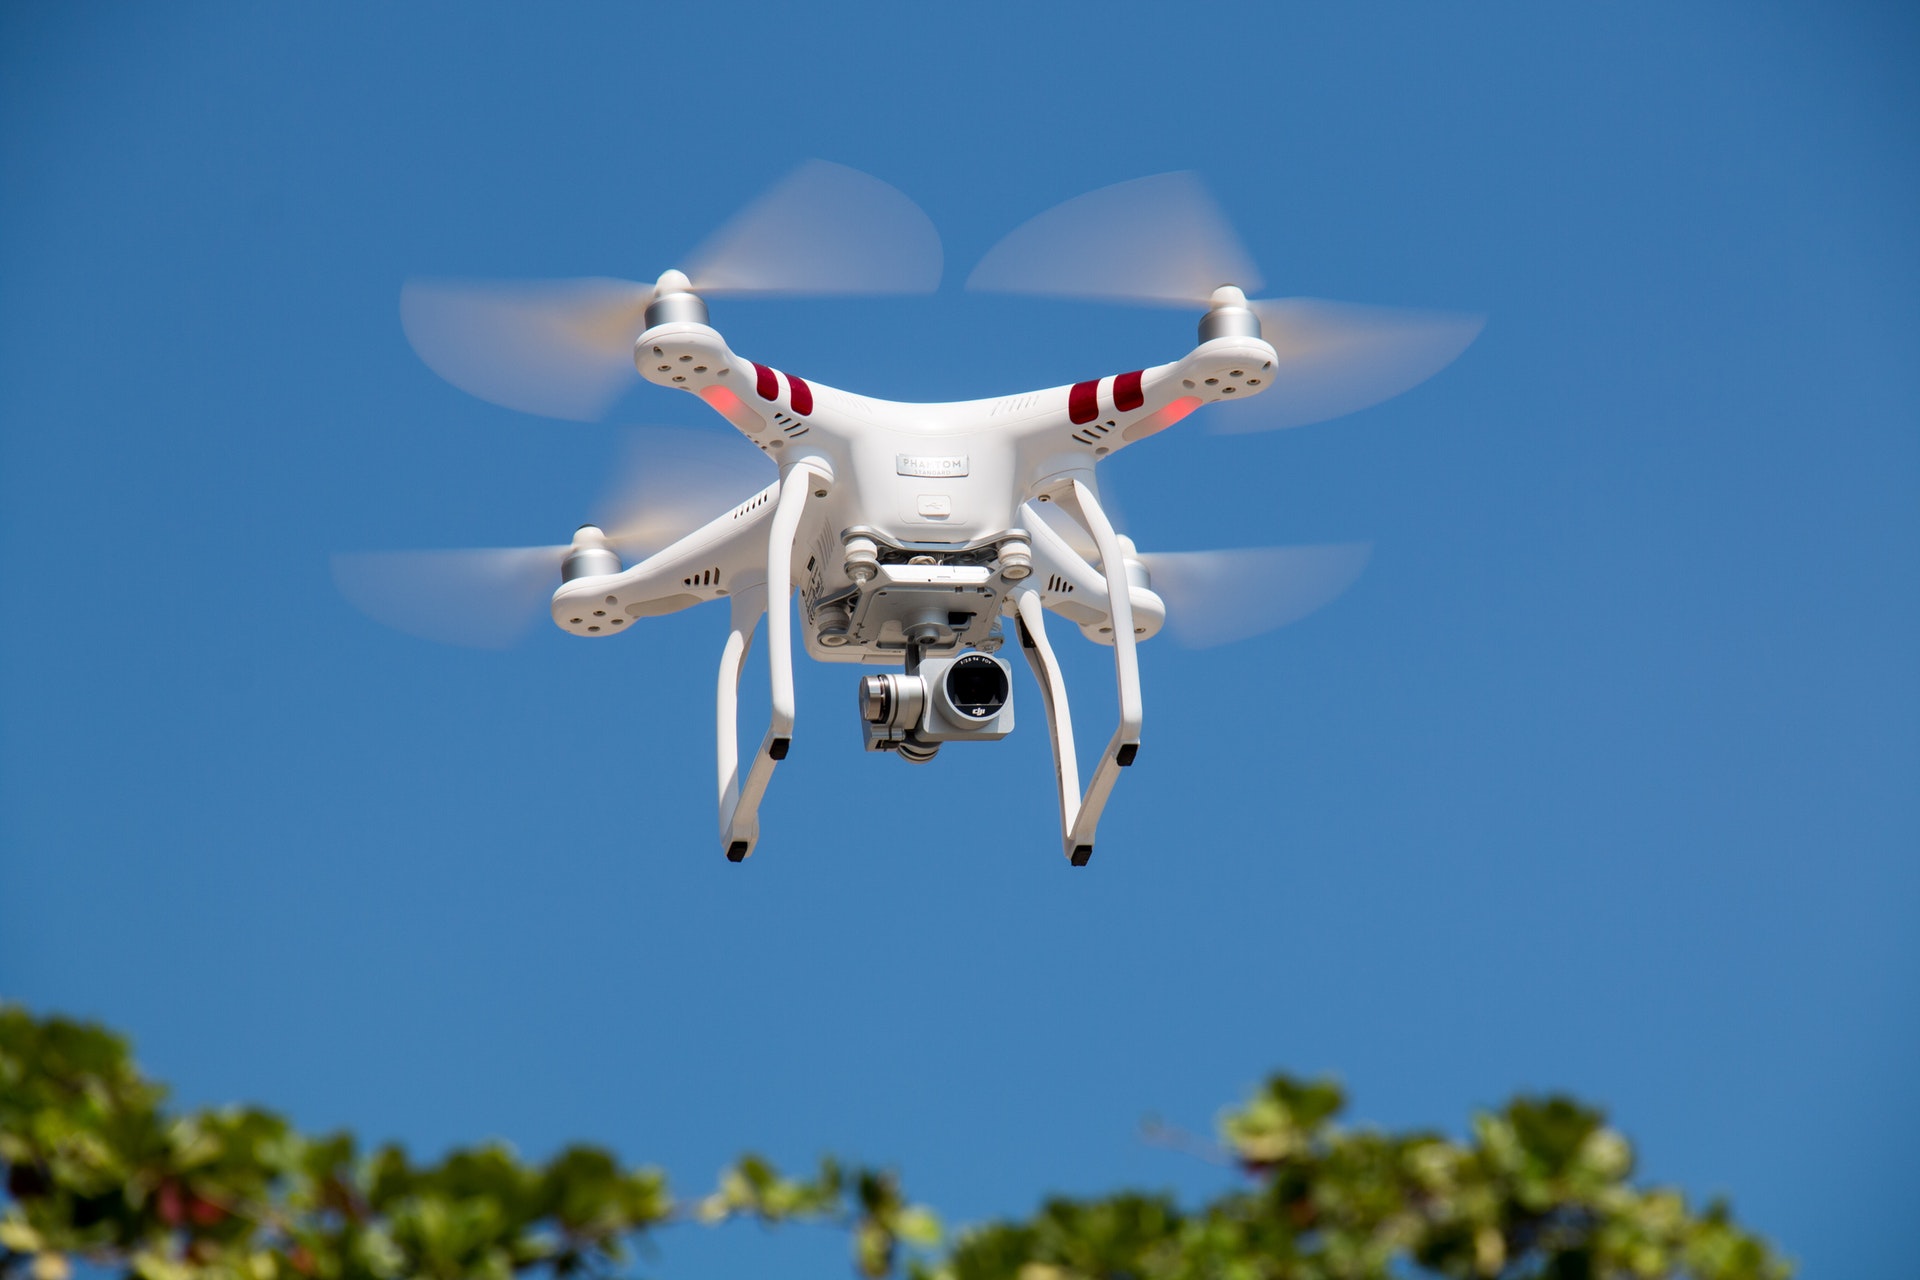 hobby drone flying, white drone against blue sky